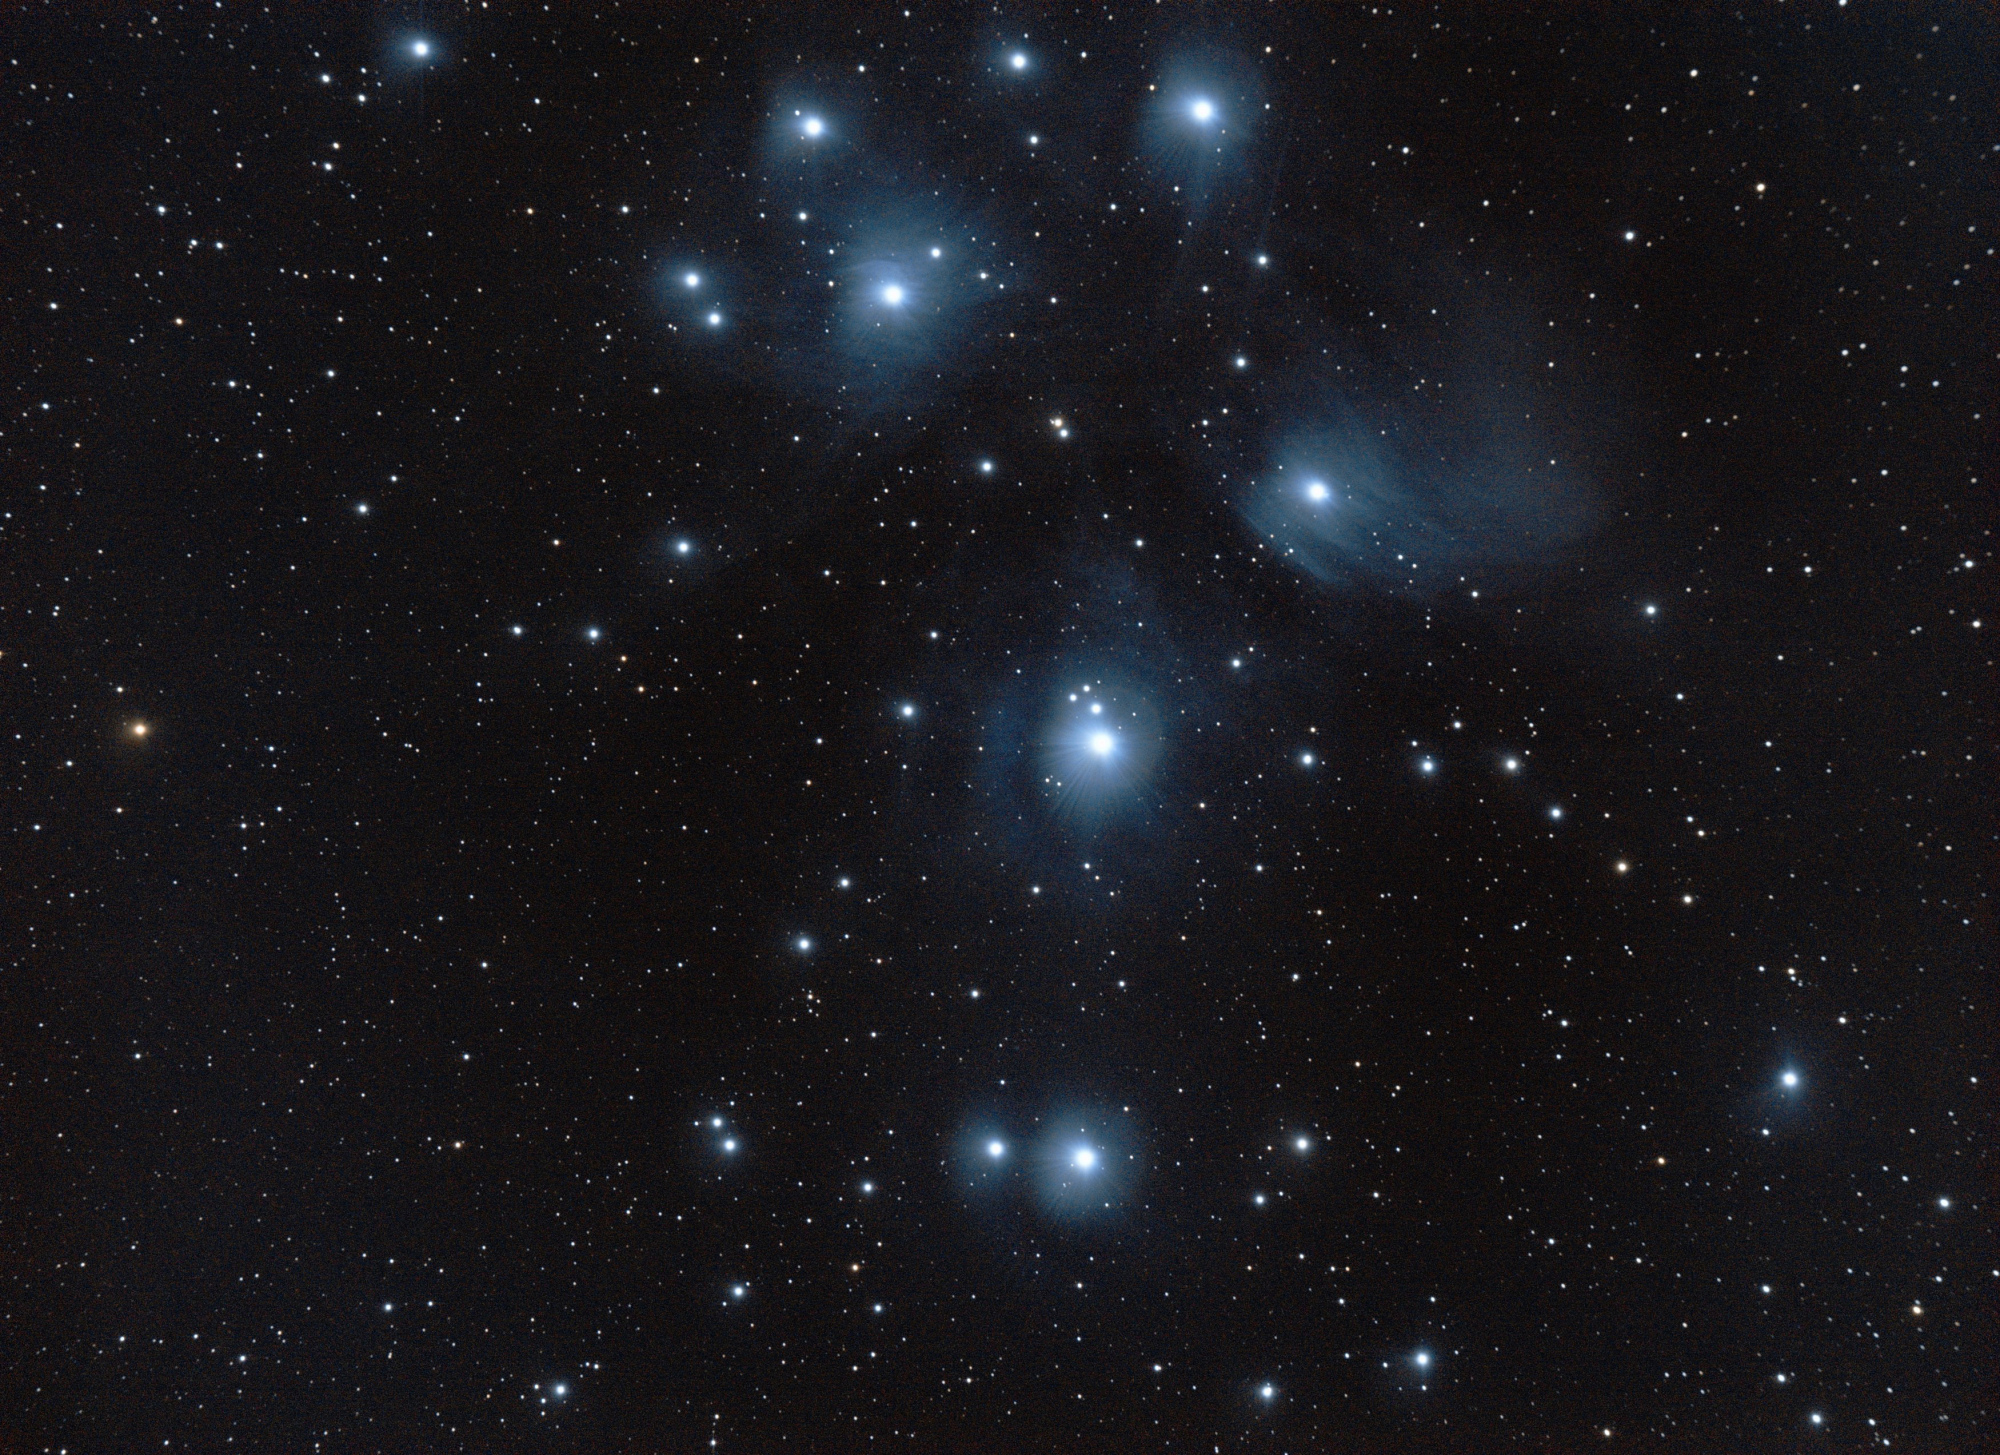 Pleiades-M45.thumb.jpg.653ad3eaf58437475f5166d6d31d49a9.jpg